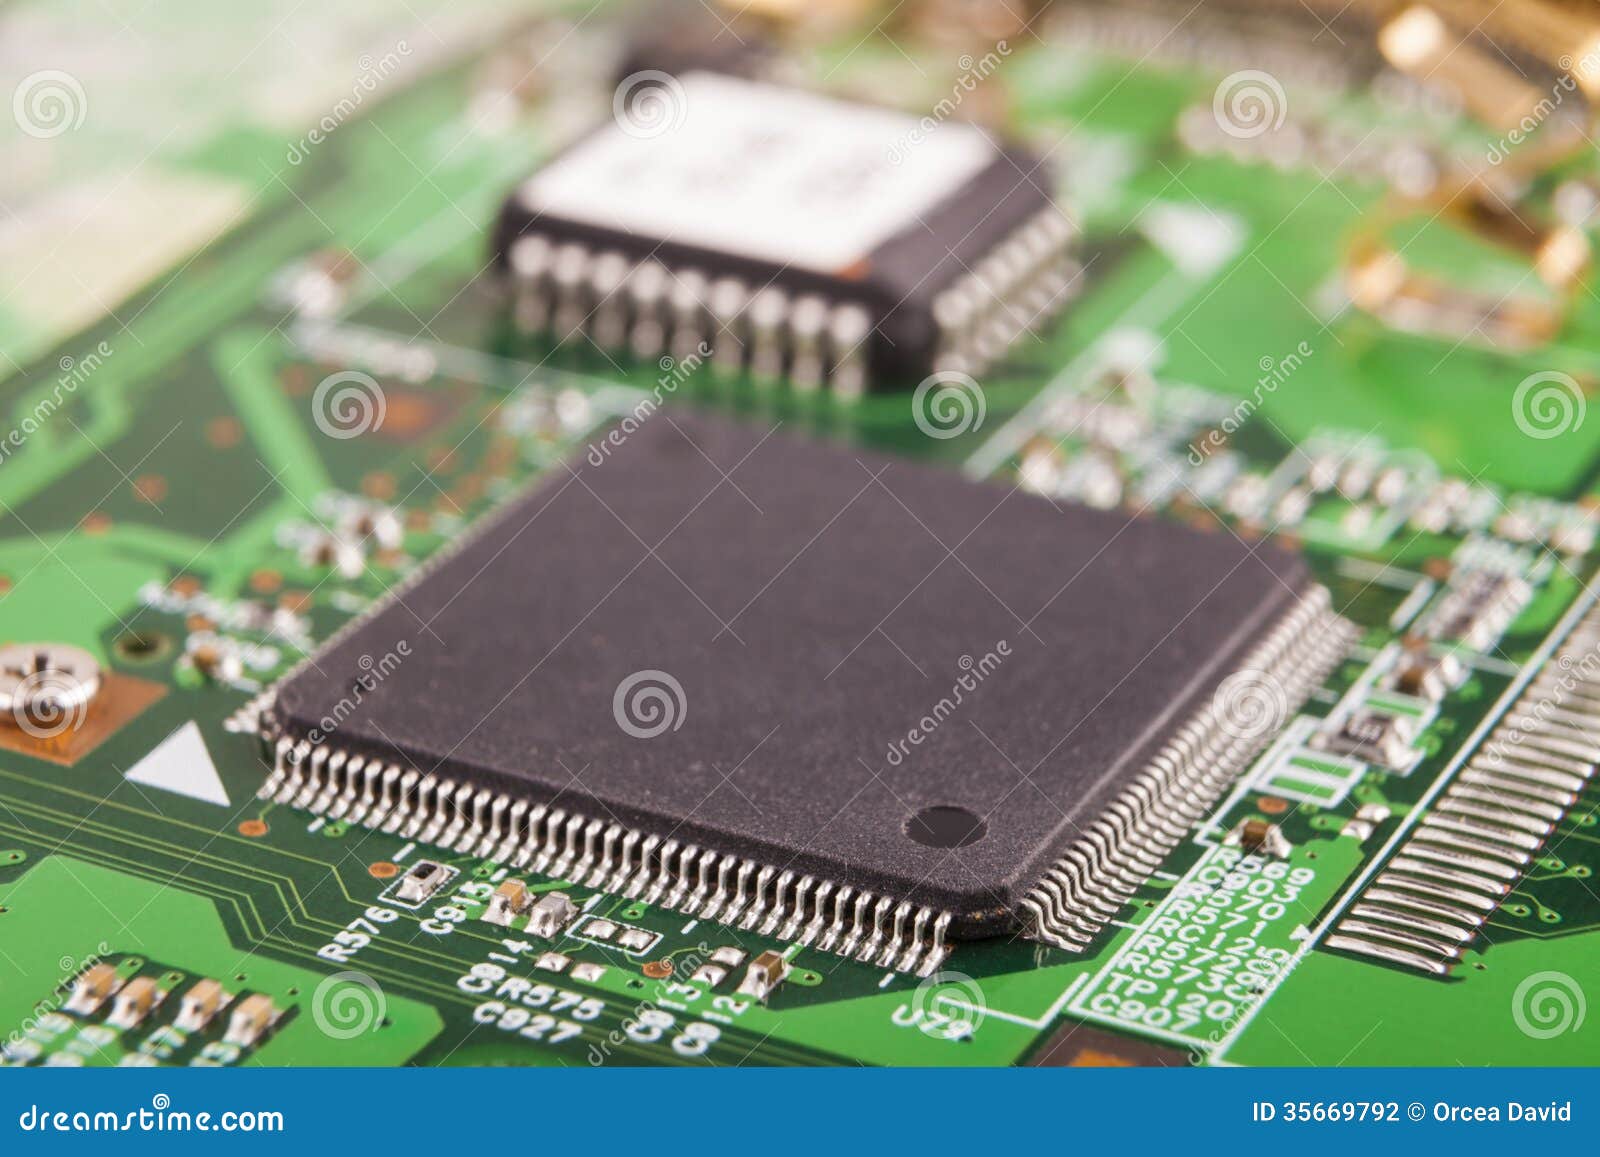 Микро картинка. Микропроцессор Индастри. TVBQA микро чип. Micro-silicium-Chip. Компьютерный чип Макросъемка.